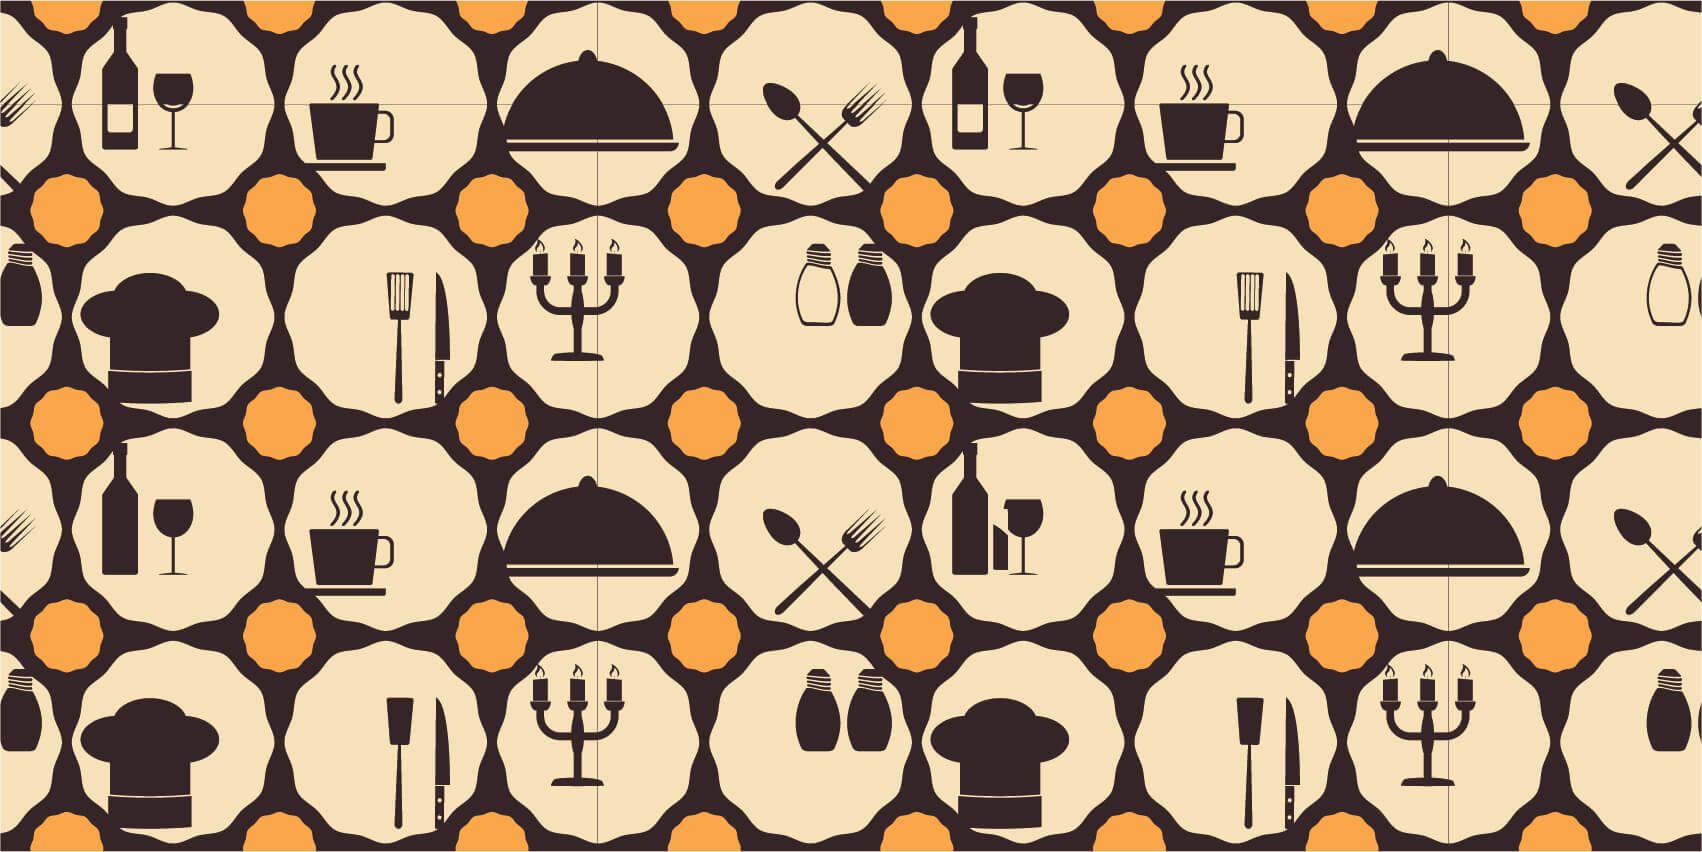 Other - Restaurant symbols - Kitchen